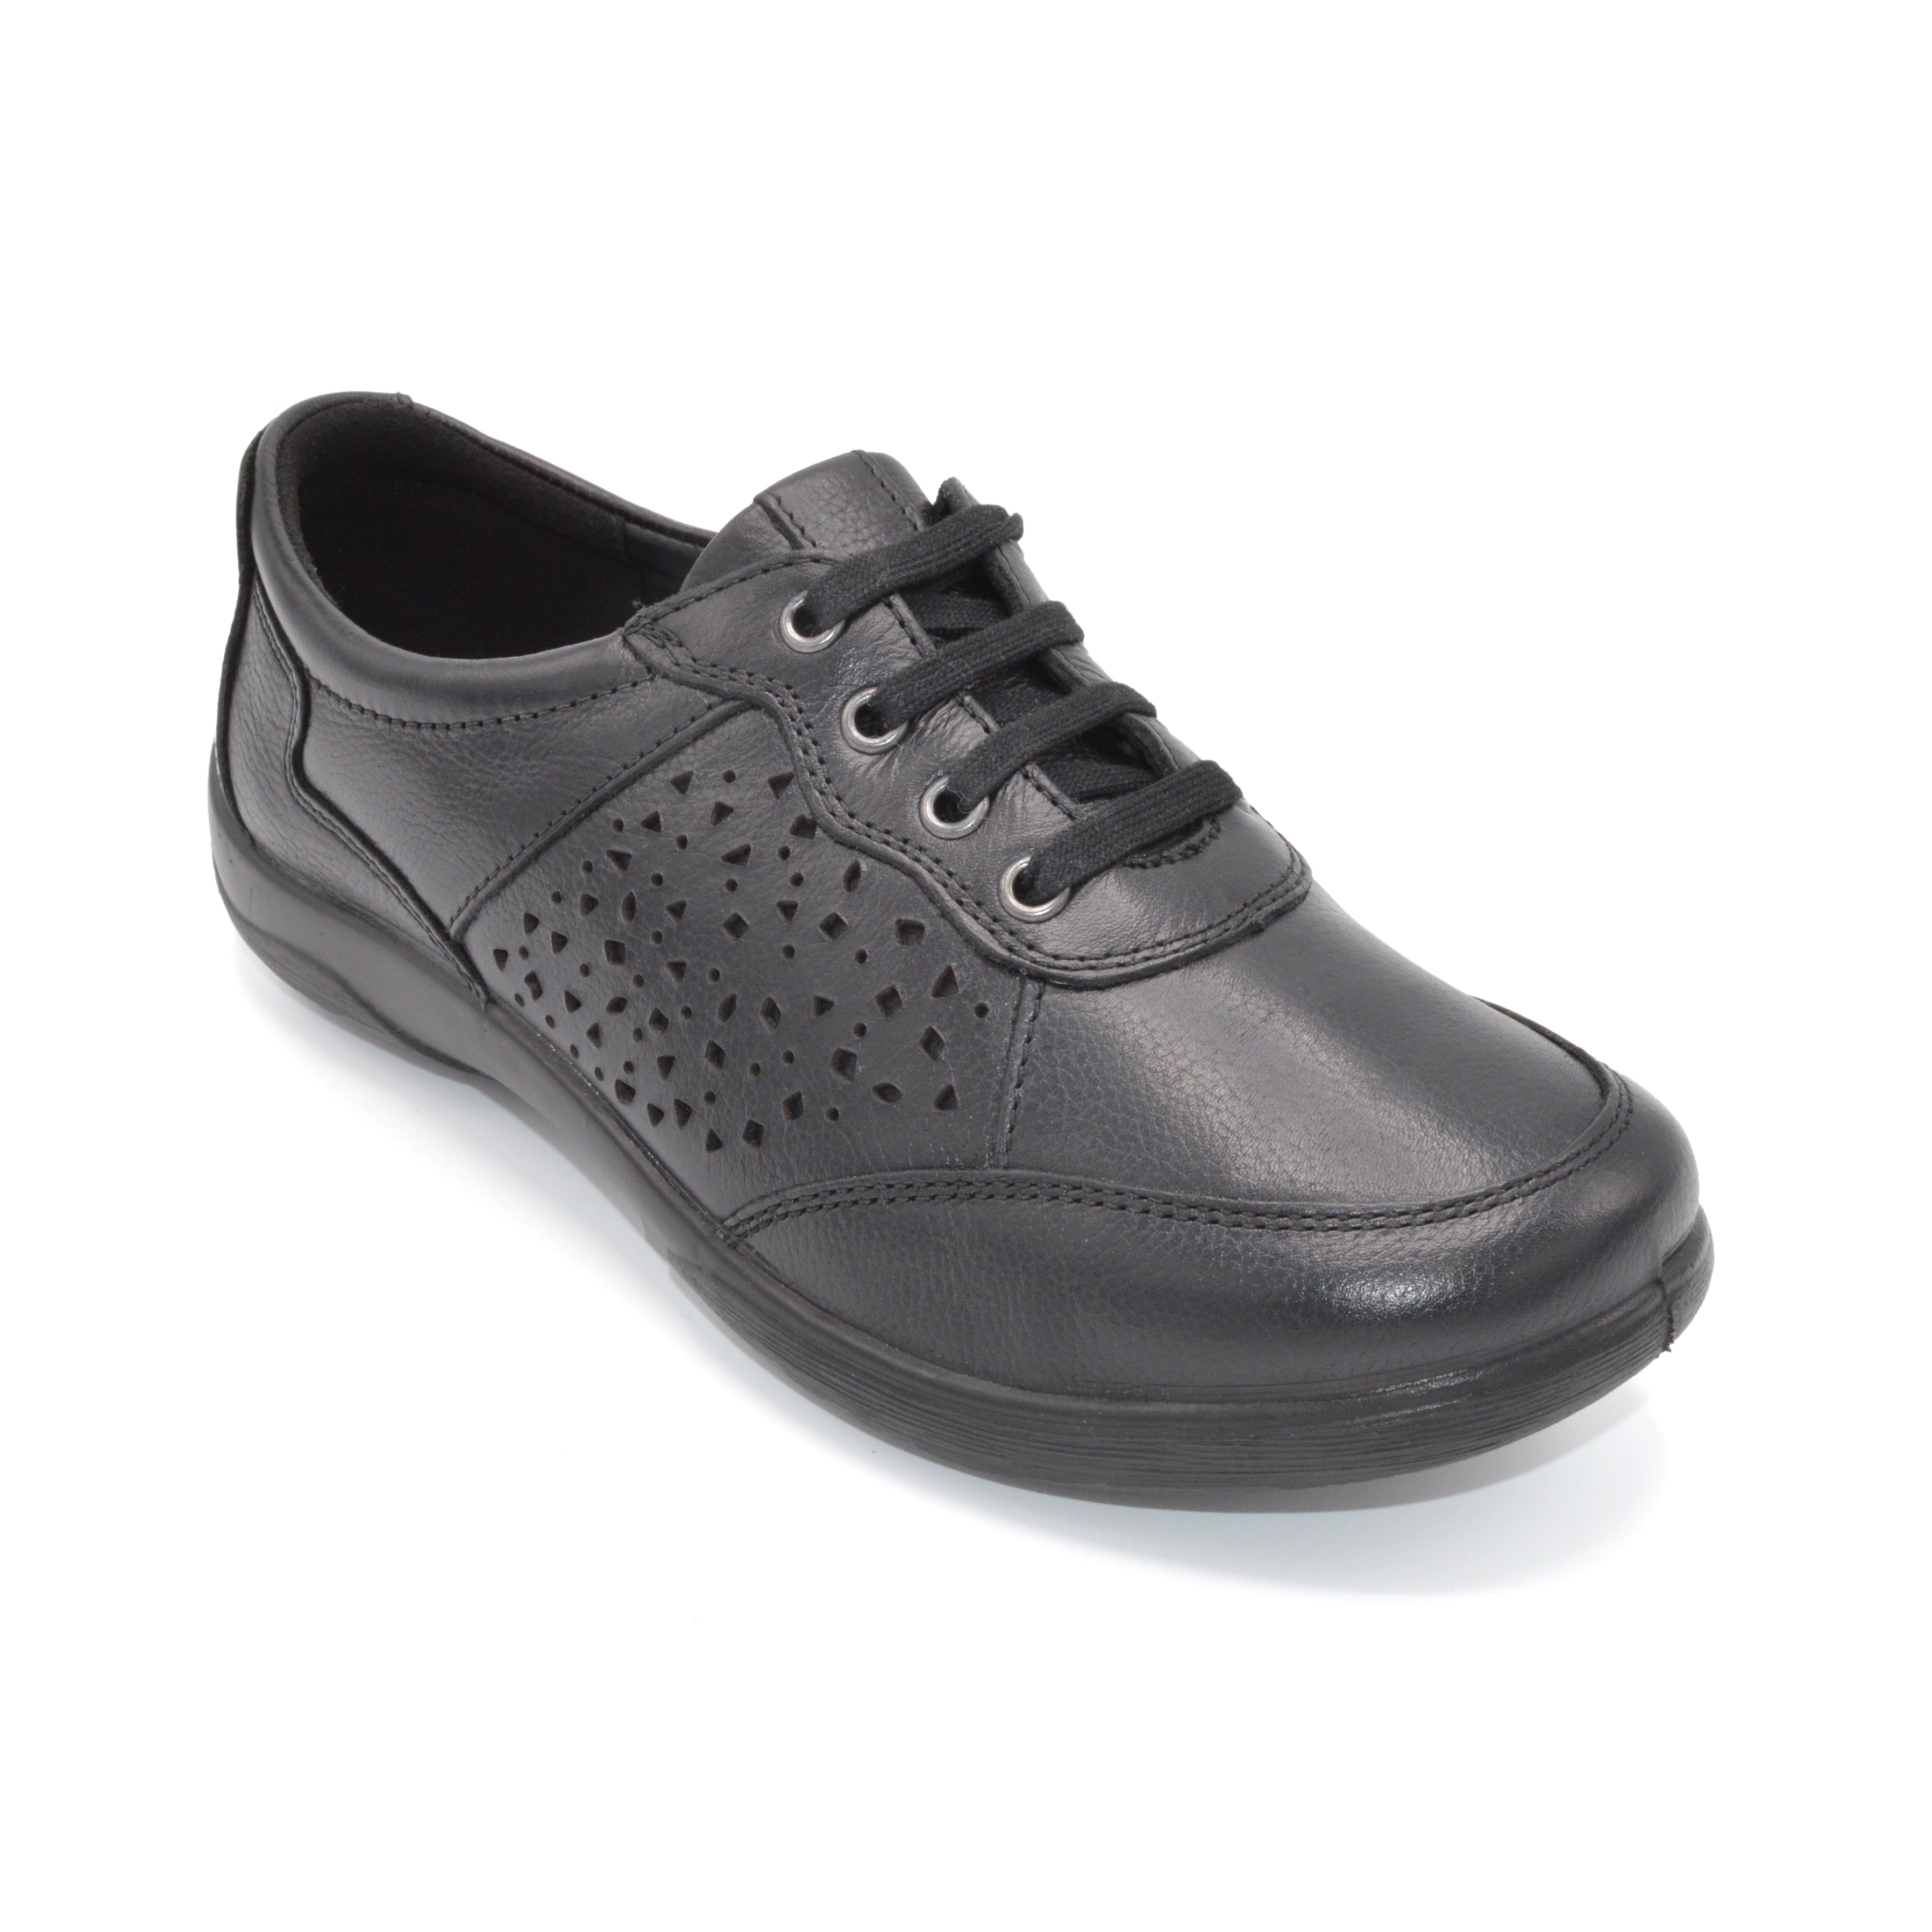 Wide Black Leather Walking Shoe For Orthotics